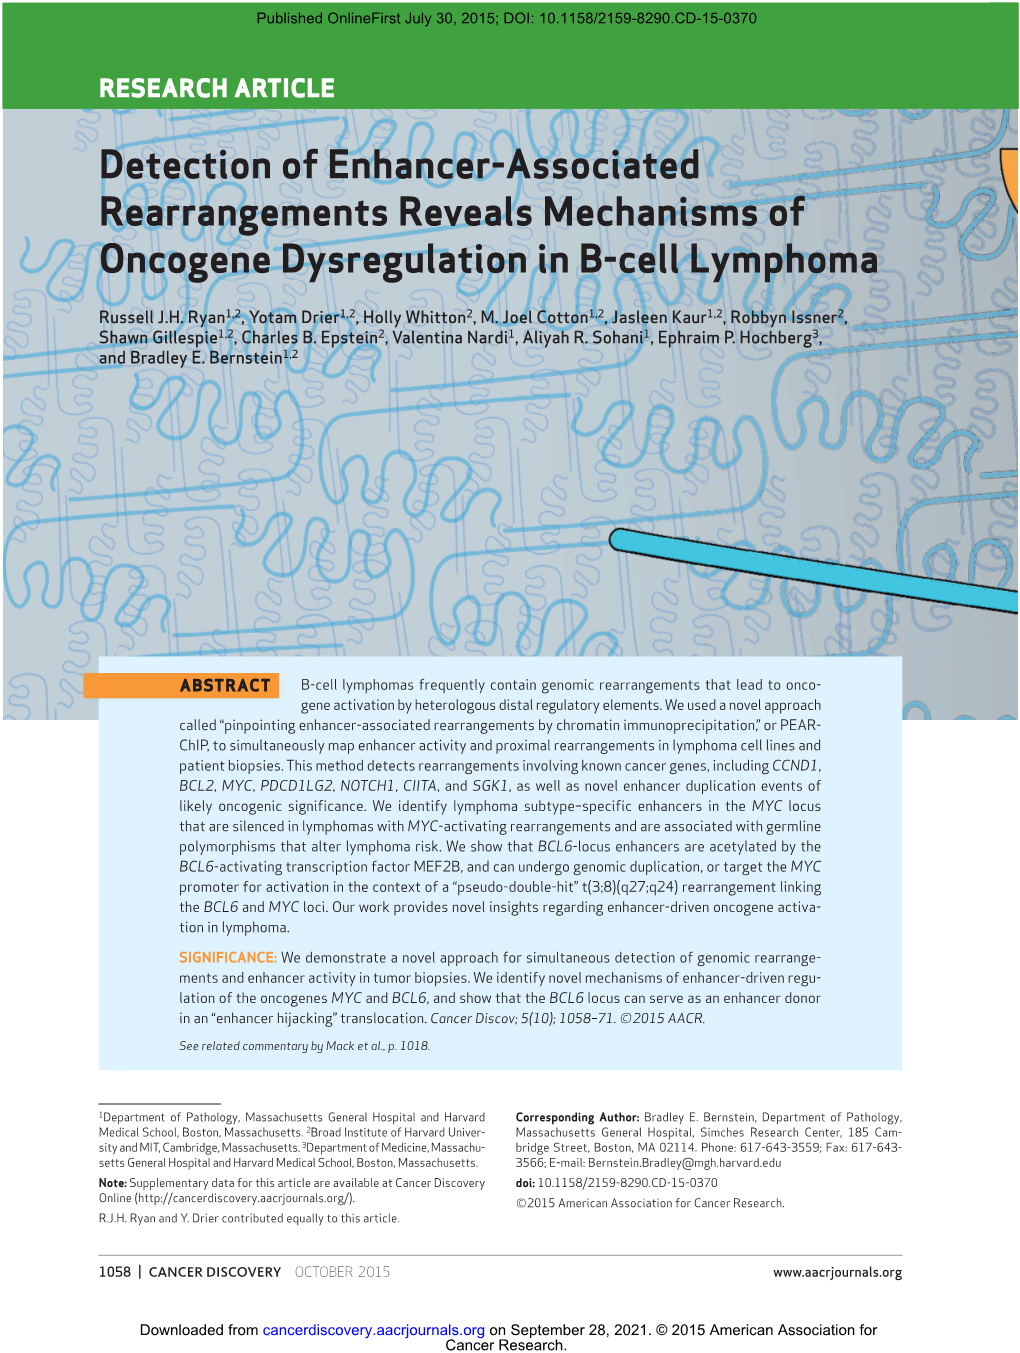 Detection of Enhancer-Associated Rearrangements Reveals Mechanisms of Oncogene Dysregulation in B-Cell Lymphoma